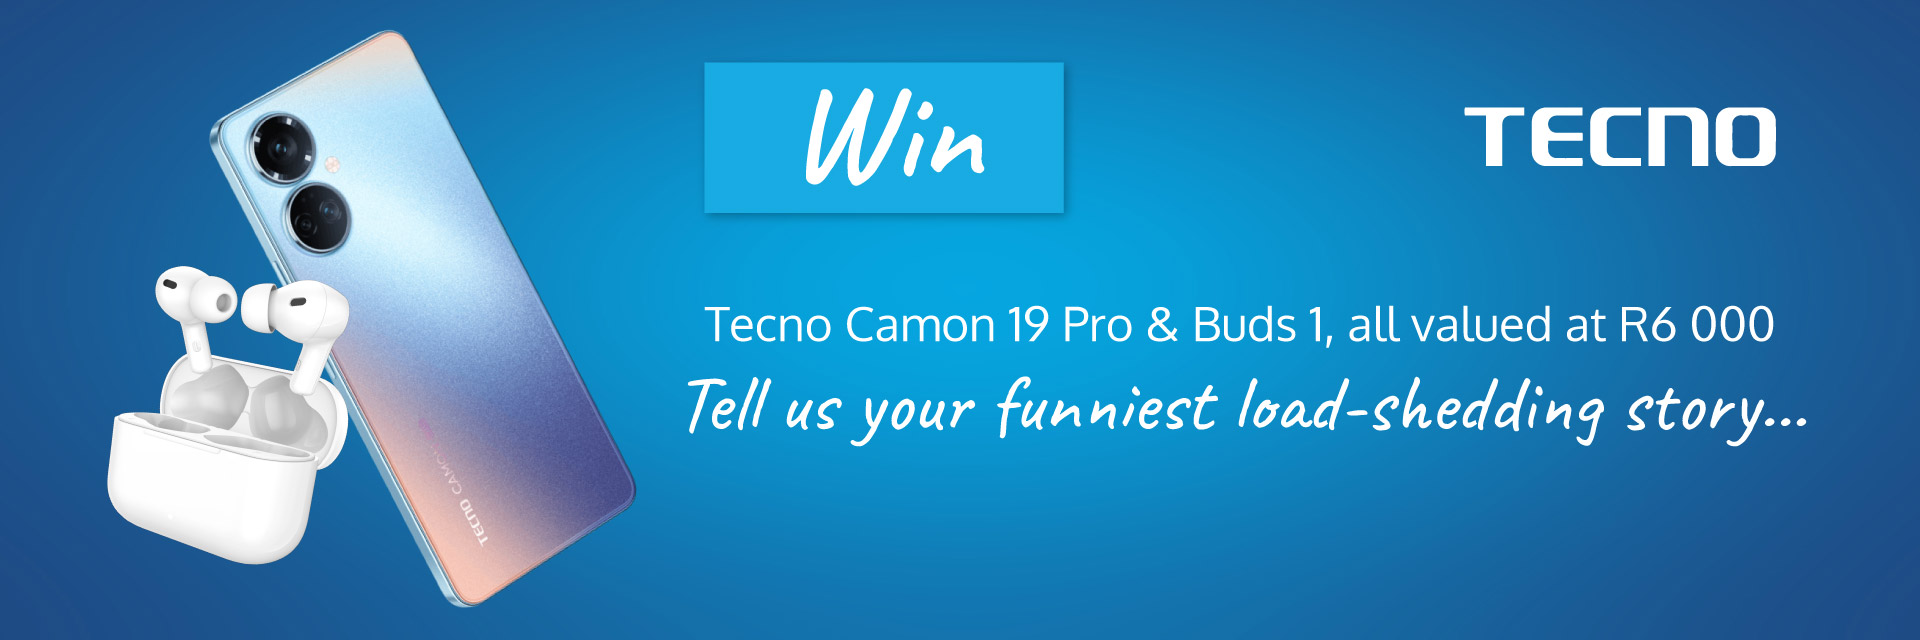 Tecno Camon 19 pro competition